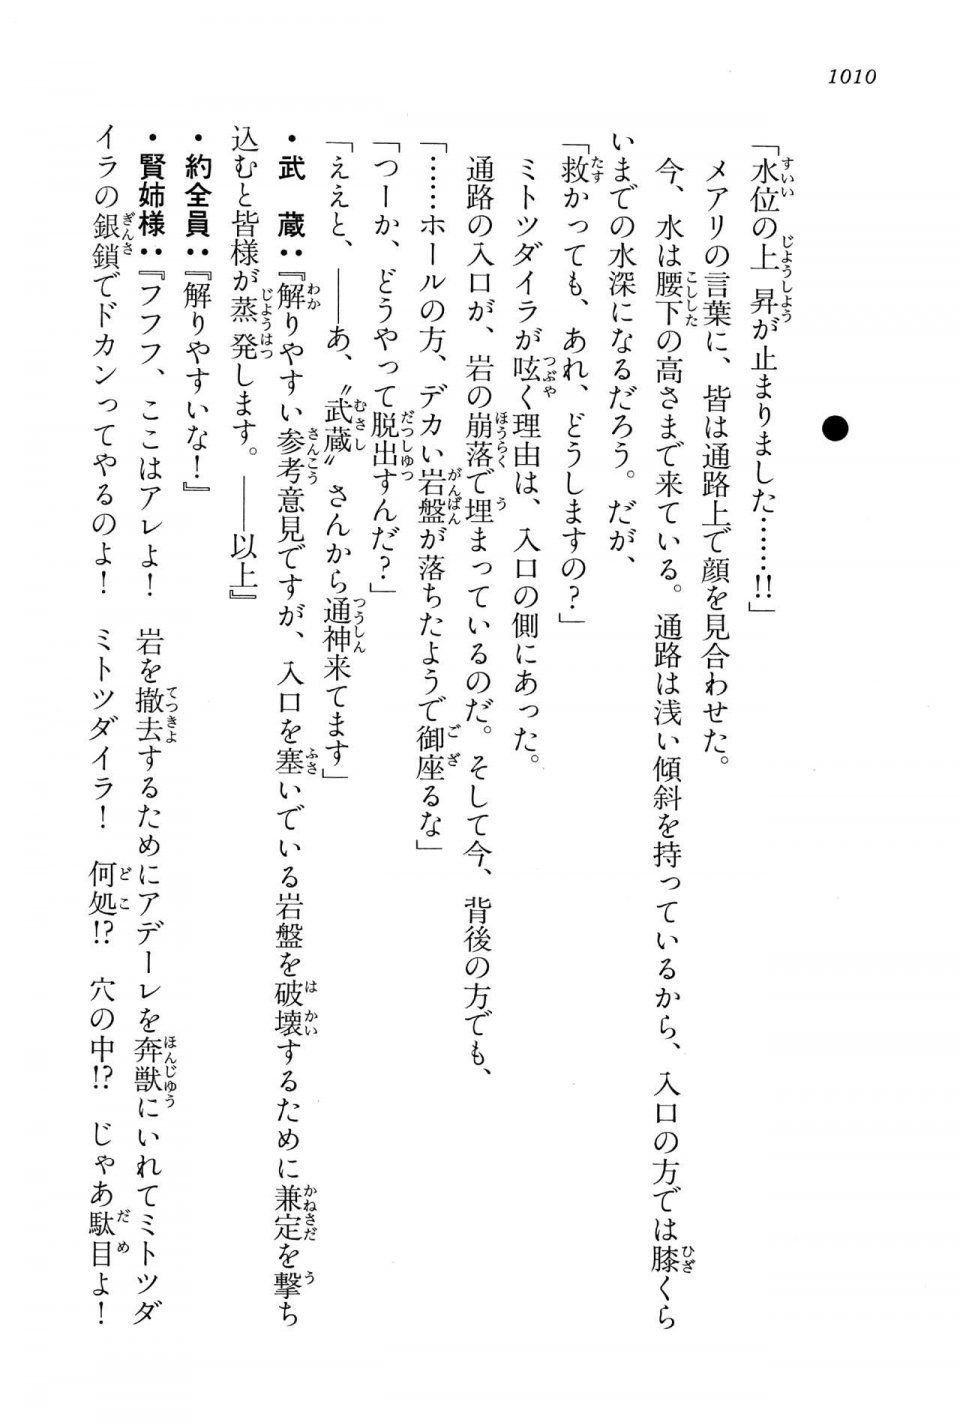 Kyoukai Senjou no Horizon LN Vol 15(6C) Part 2 - Photo #480